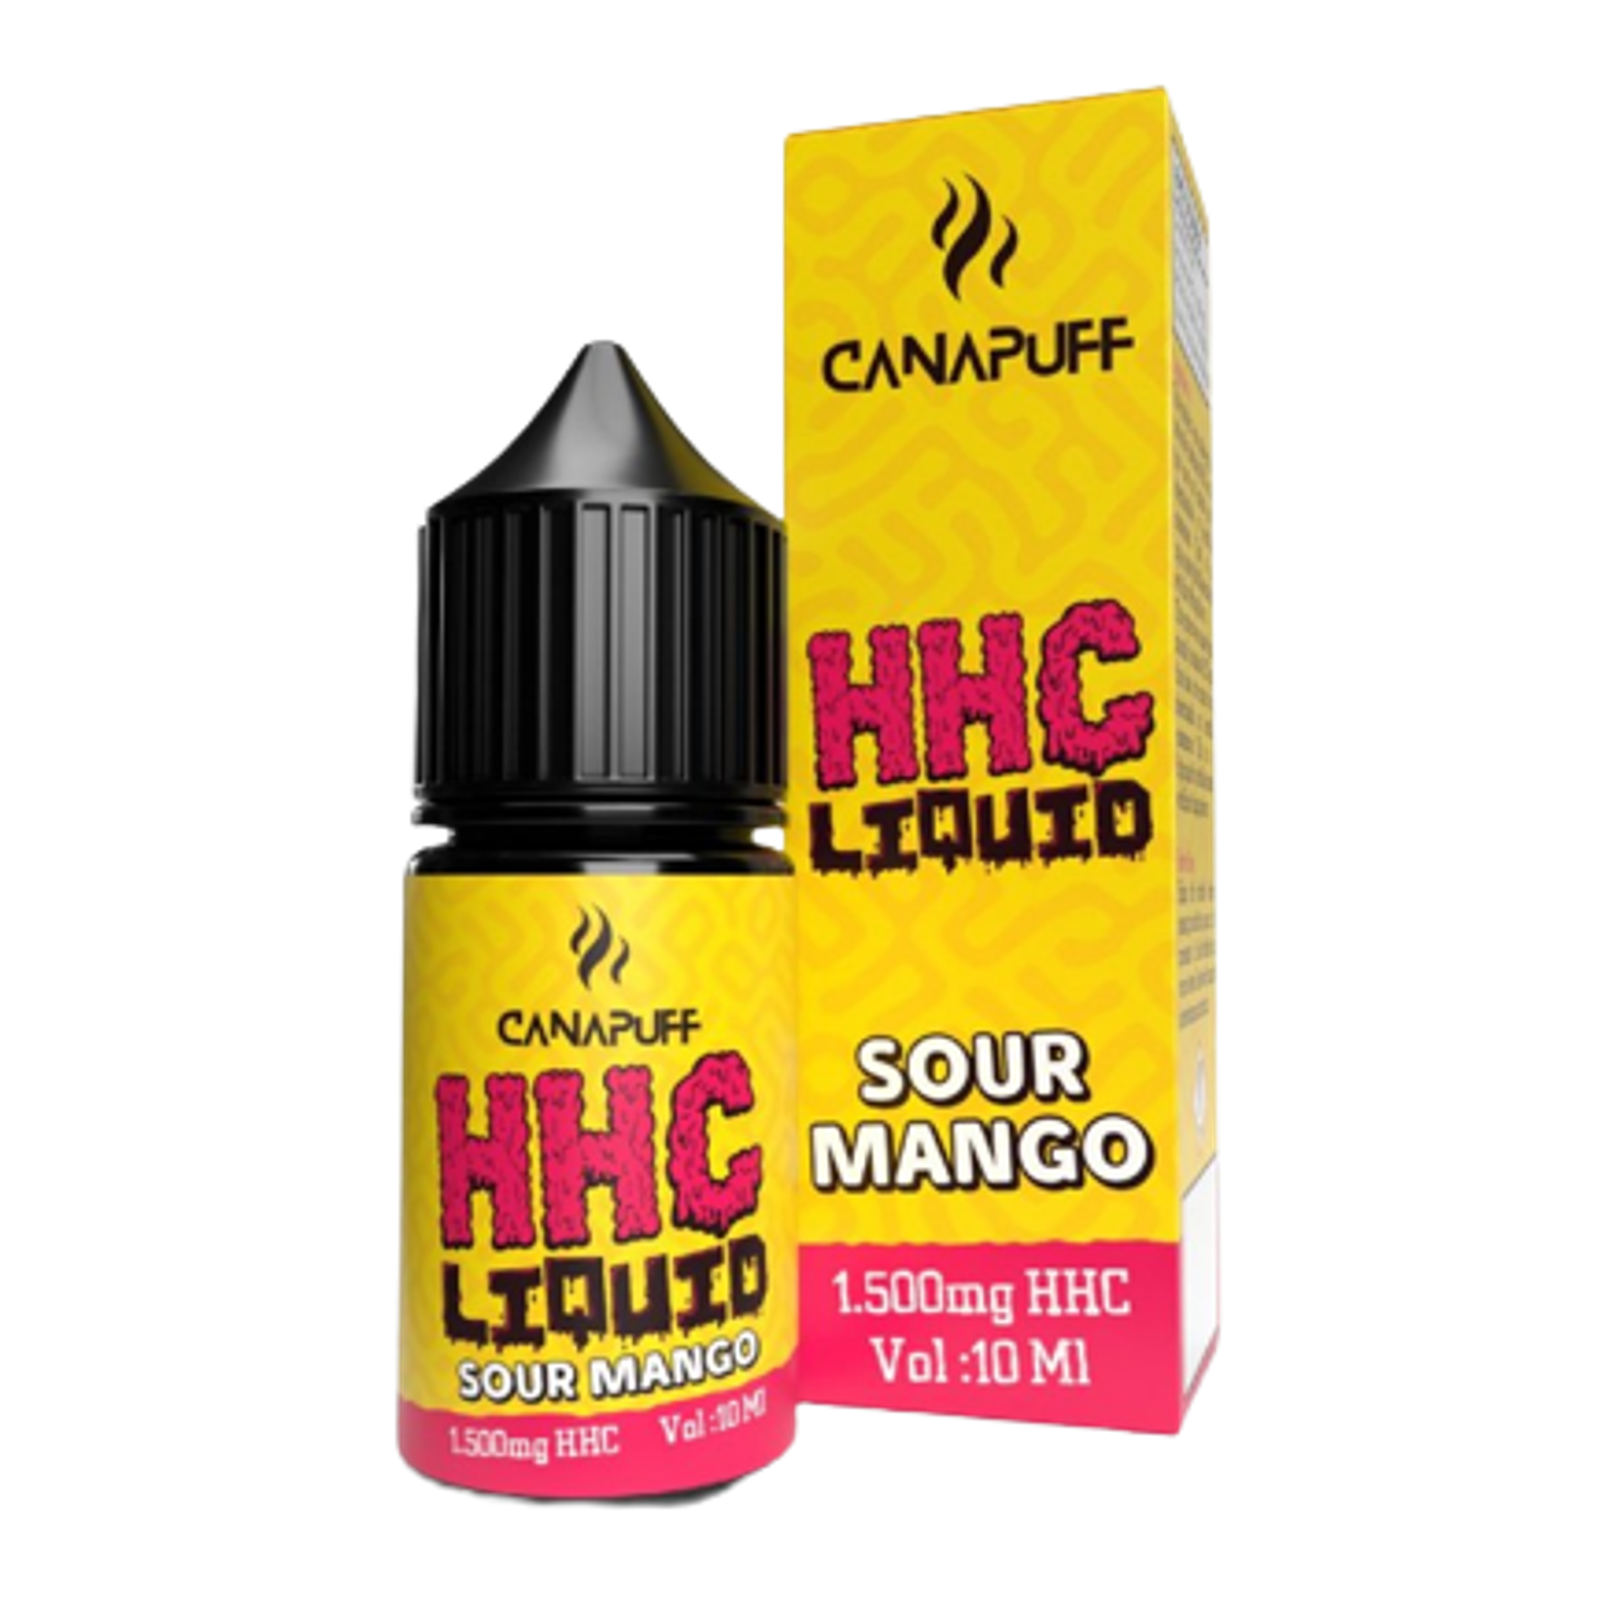 HHC-Liquid-1.5mg-Sour-Mango-main-0.png